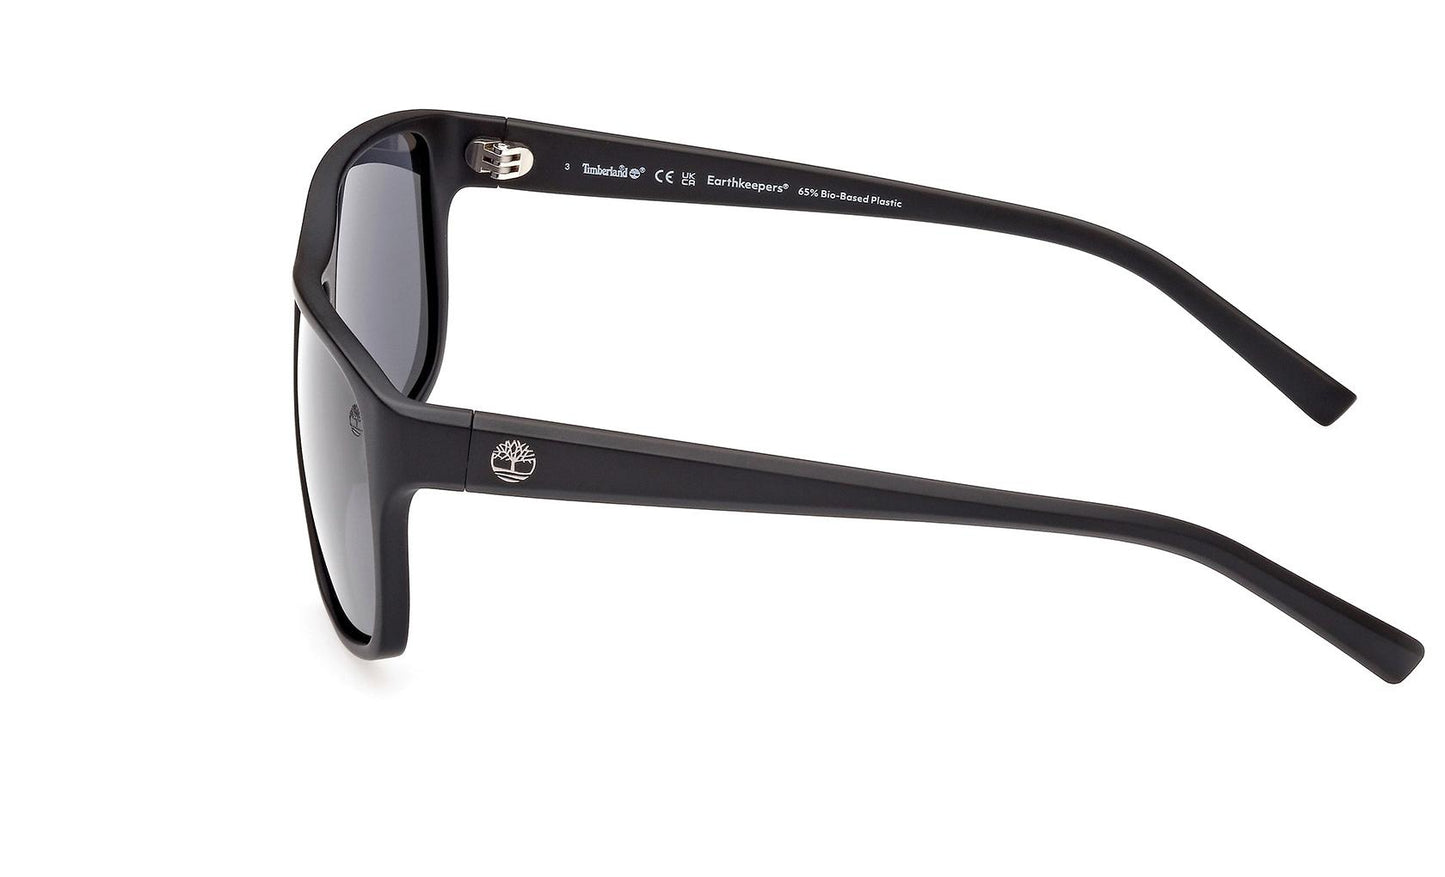 Timberland Sunglasses TB9295 02D